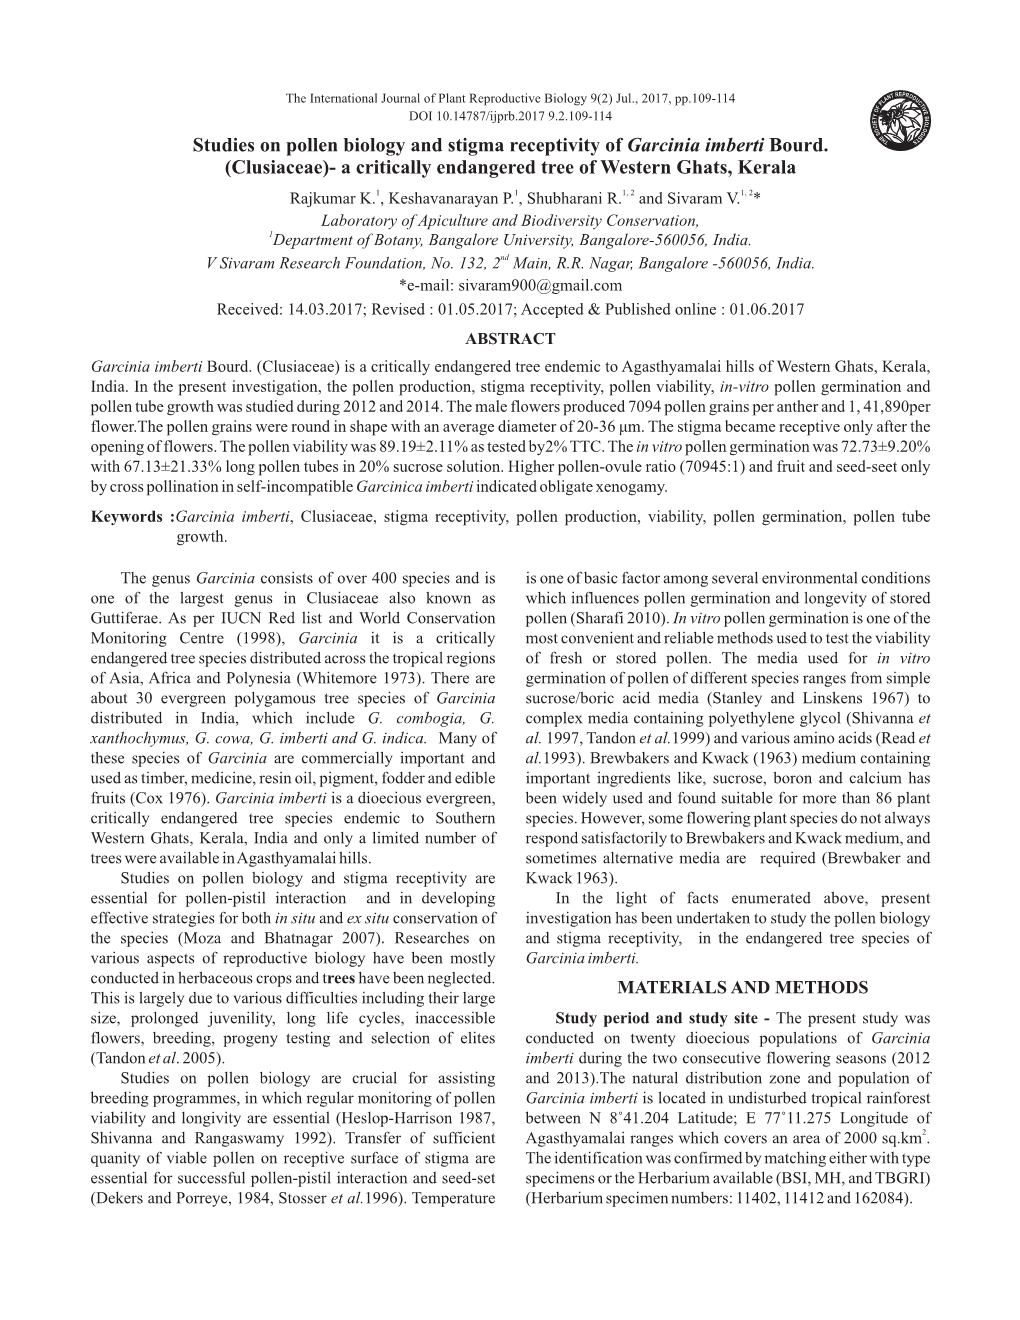 Studies on Pollen Biology and Stigma Receptivity of Garcinia Imberti Bourd